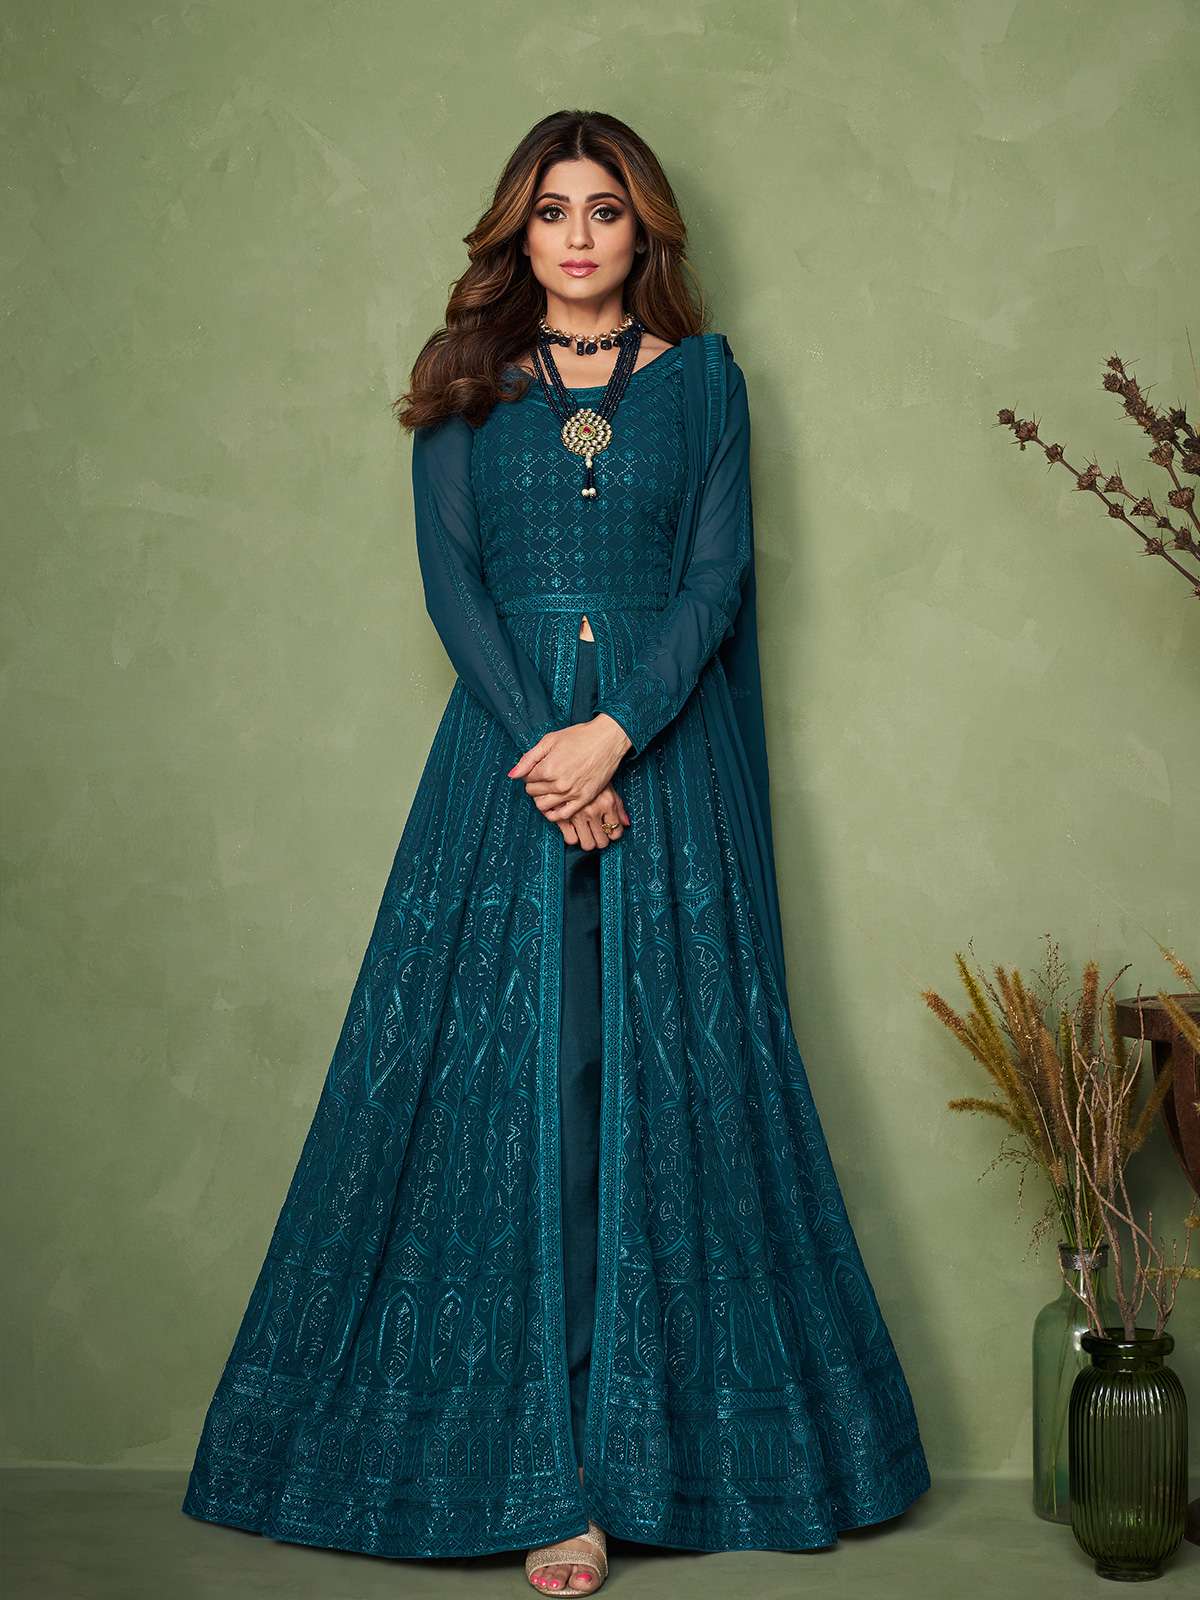 Shamita Shetty in Georgette Blue Embroidered Anarkali Suit-9144